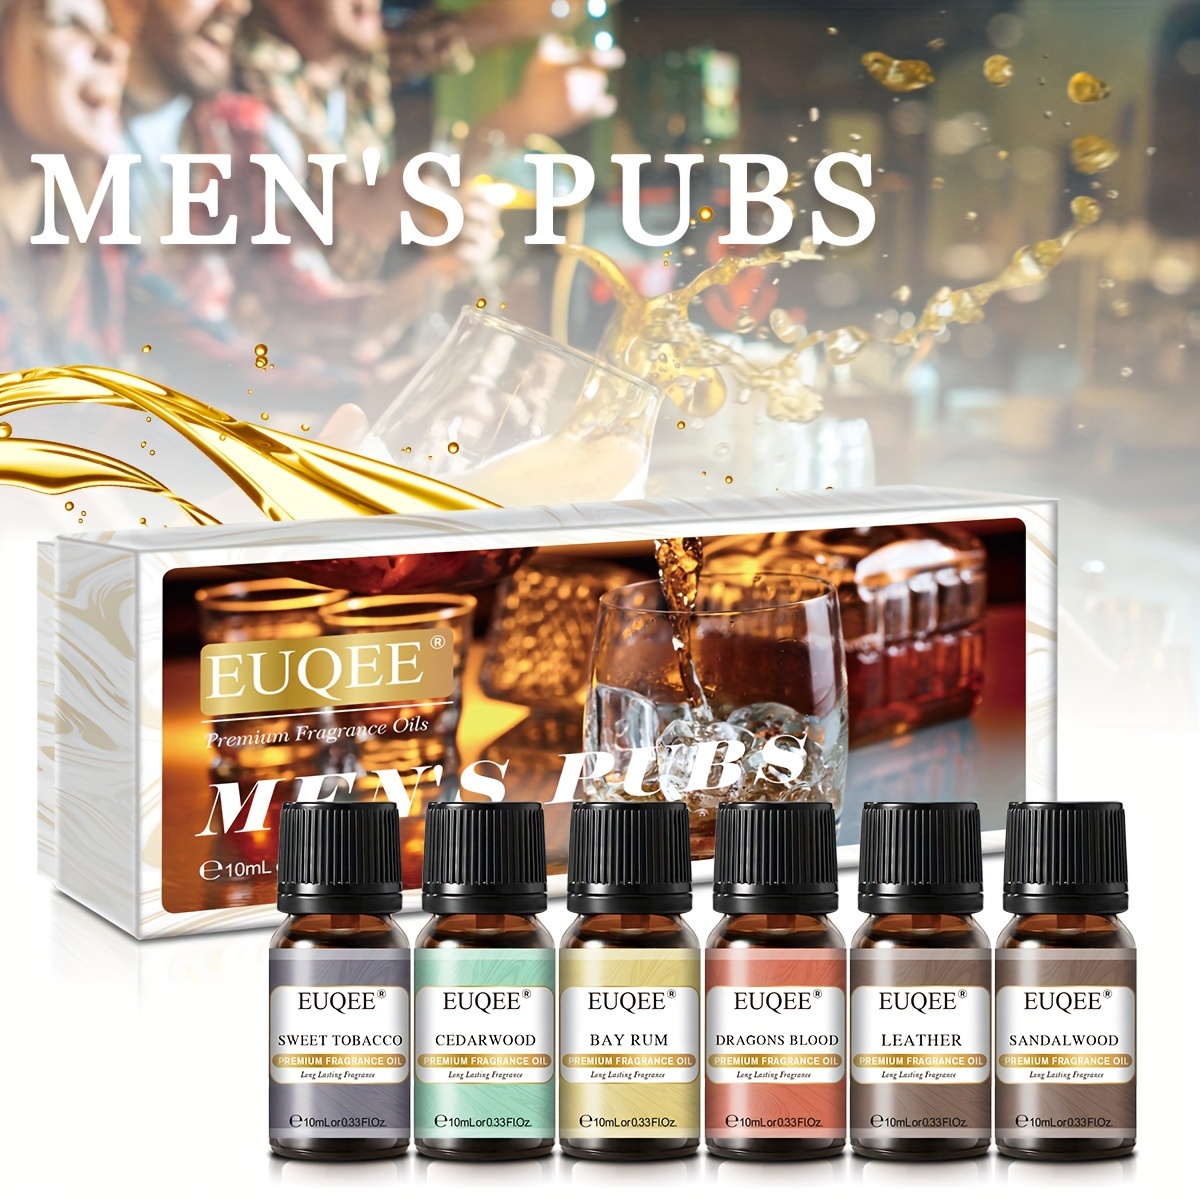  EUQEE 6PCS Fragrance Oils for Men, Men's Pubs Gift Set Premium  Fragrance Oils -10ml-Leather, Sweet Tobacco, Dragons Blood, Sandalwood, Bay  Rum, Cedarwood (Men's Pubs) : Health & Household